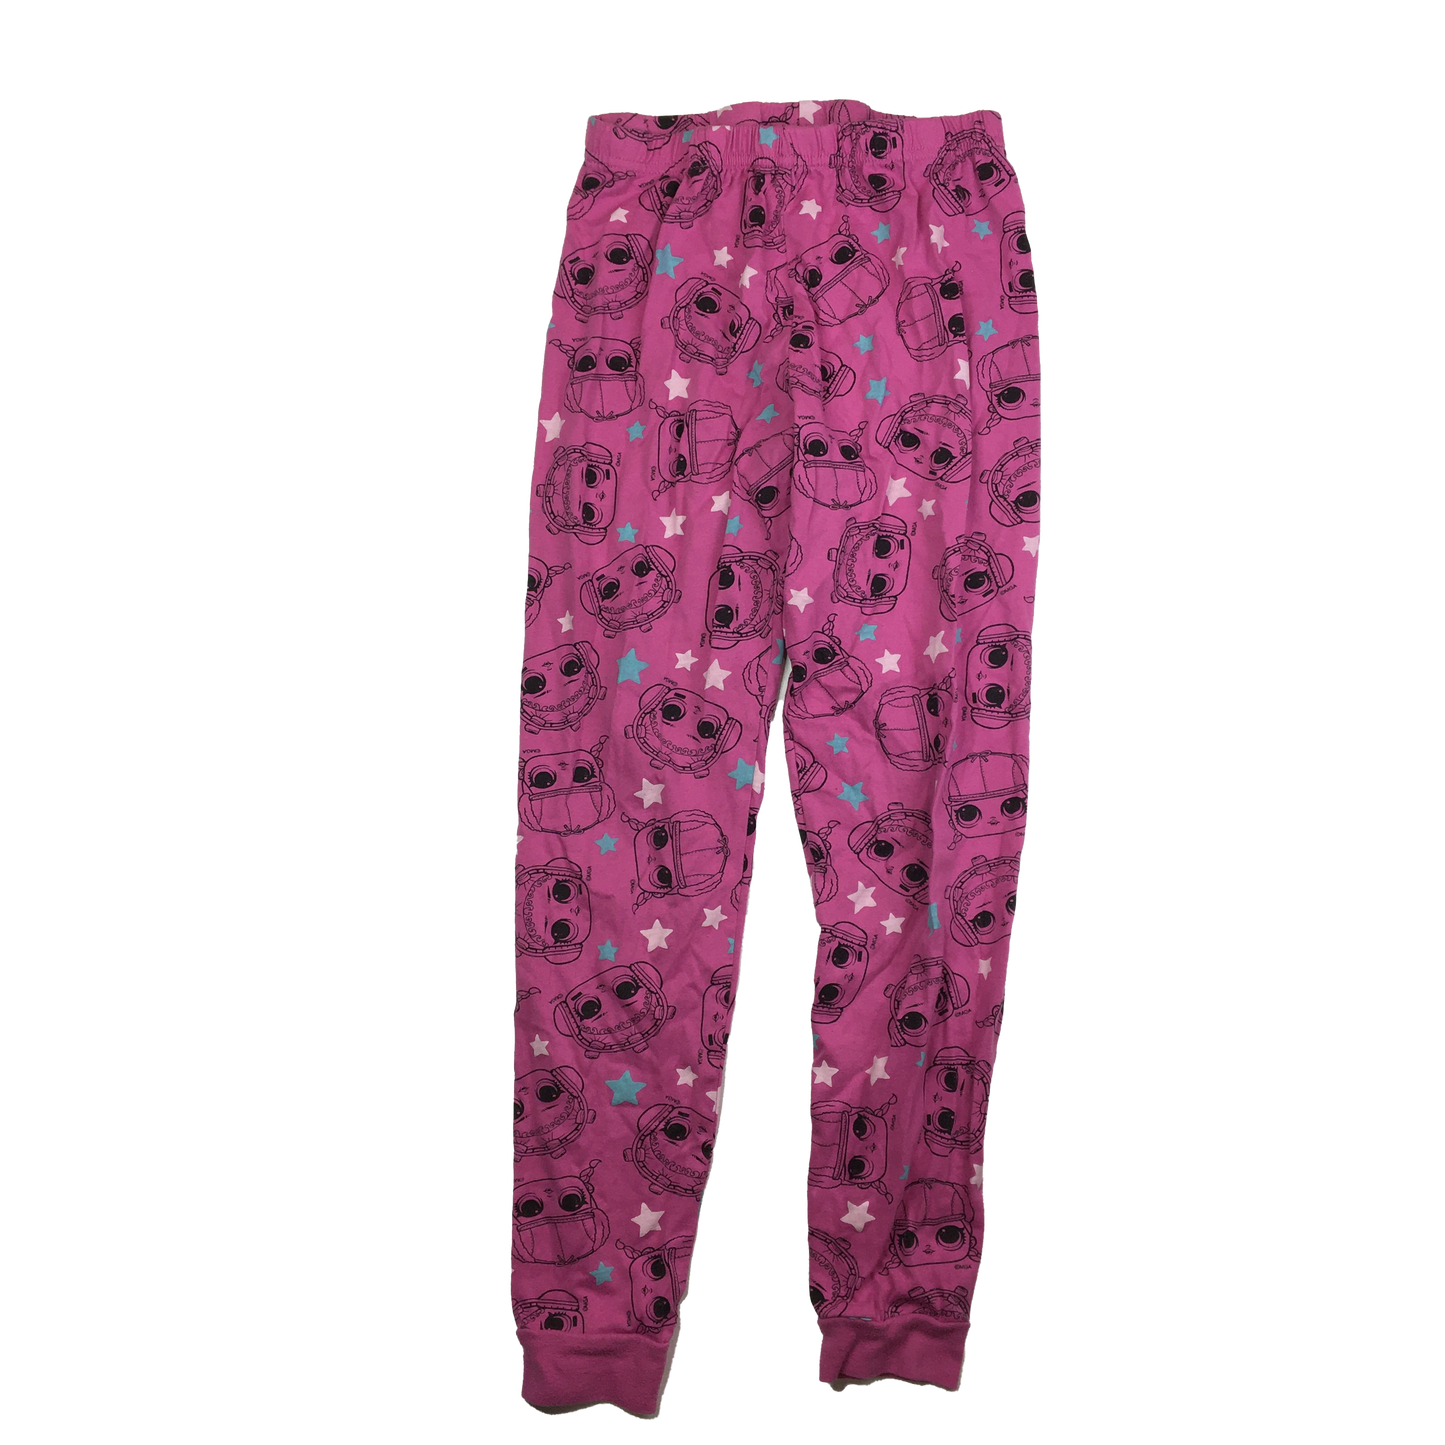 LOL Surprise Pink PJ Pants 10-12